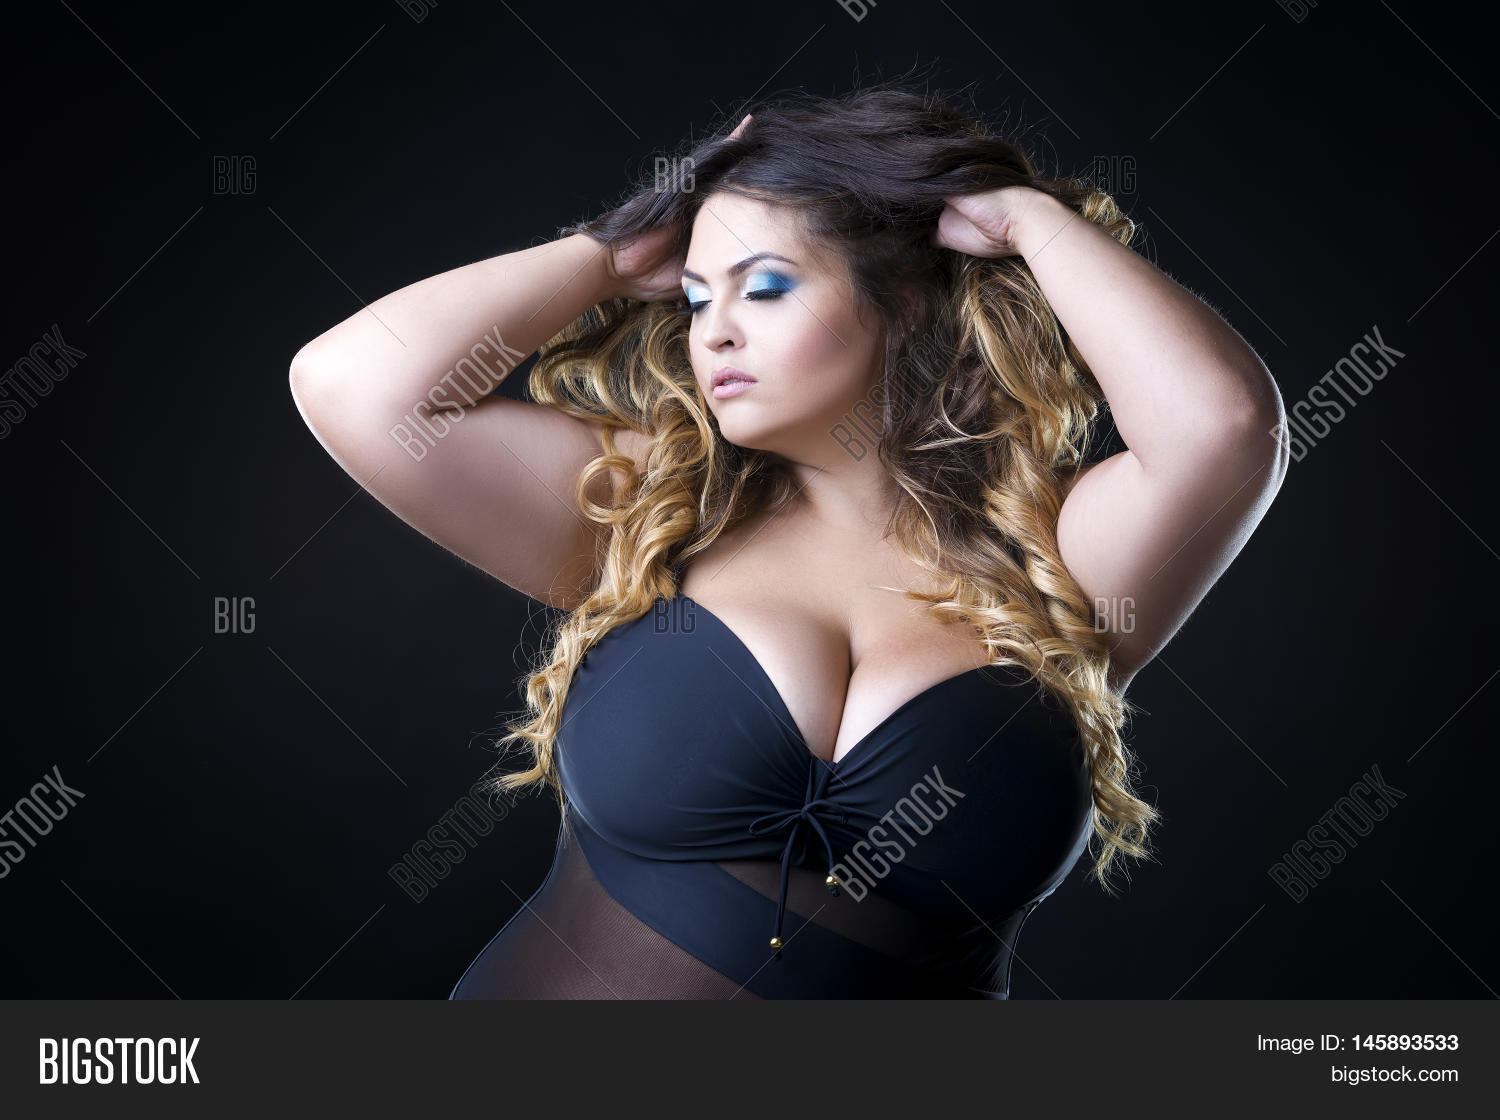 clark lat add big and beautiful breast photo